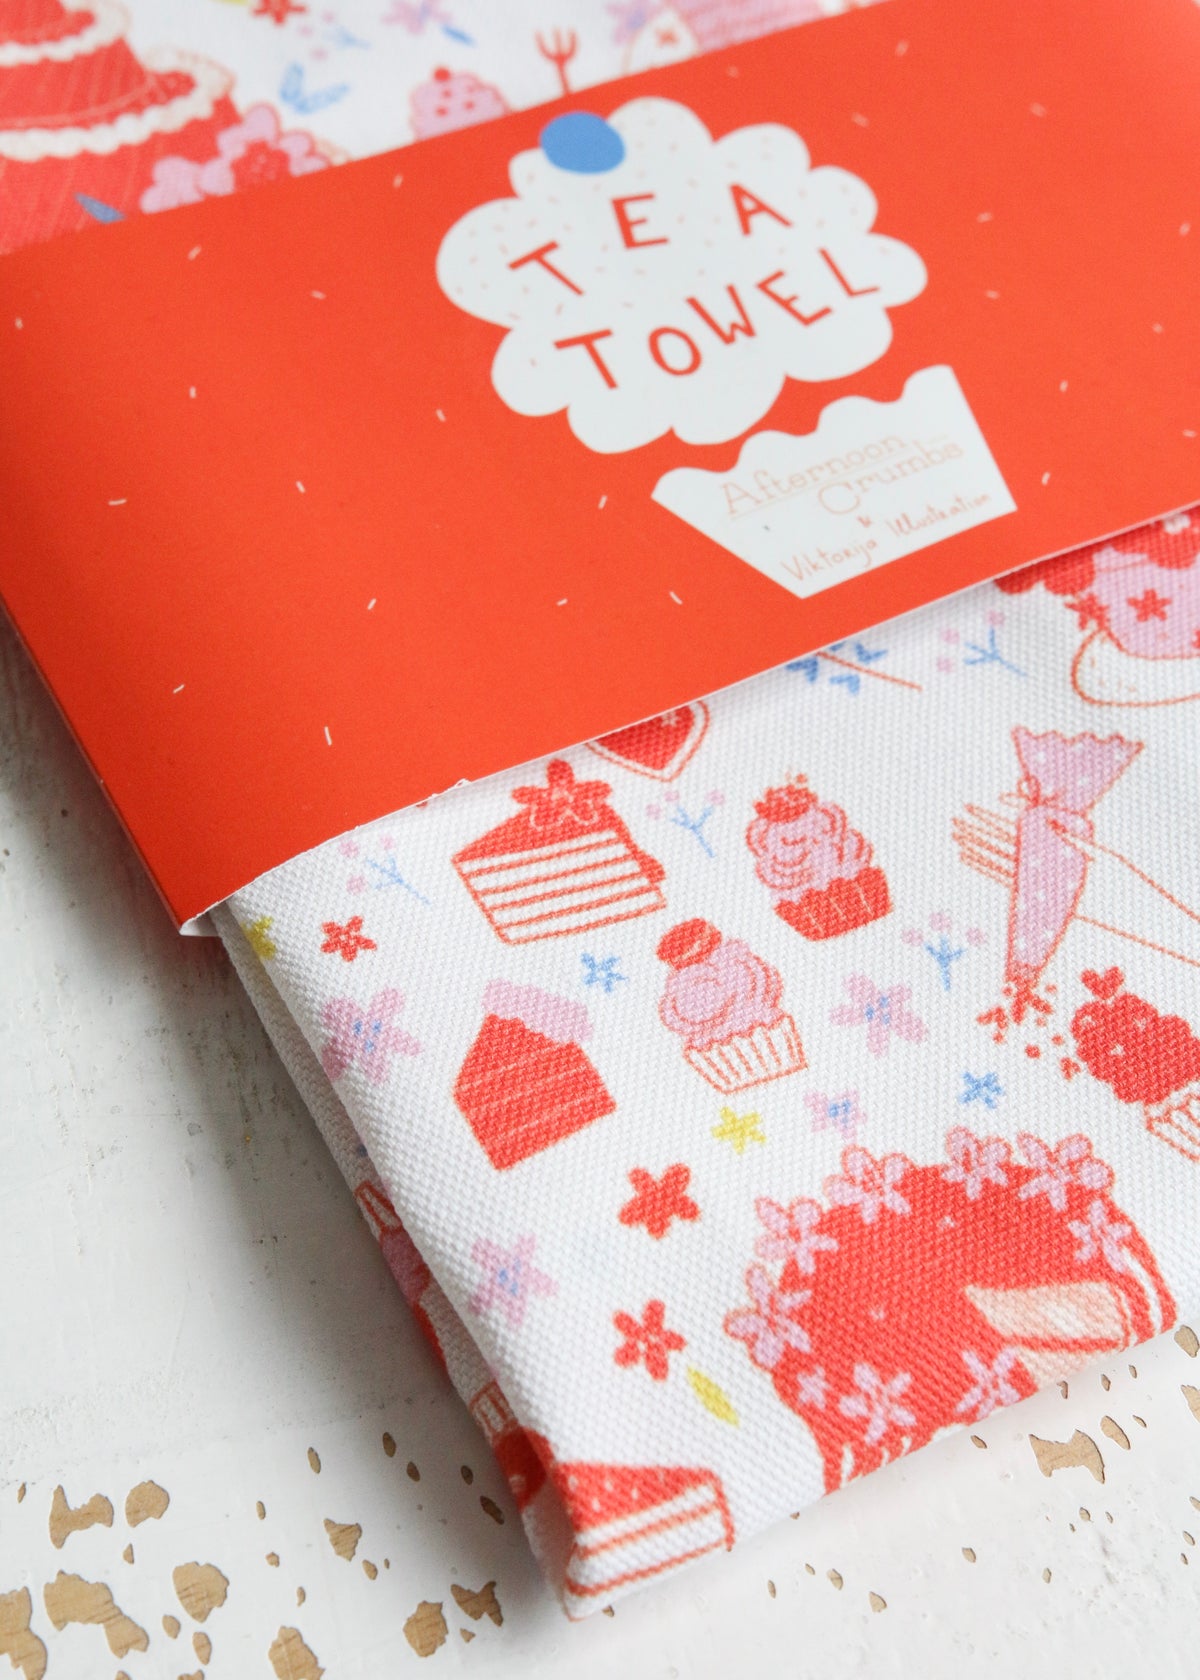 Illustrated Tea Towel  Featuring Cake & Cupcakes Close Up